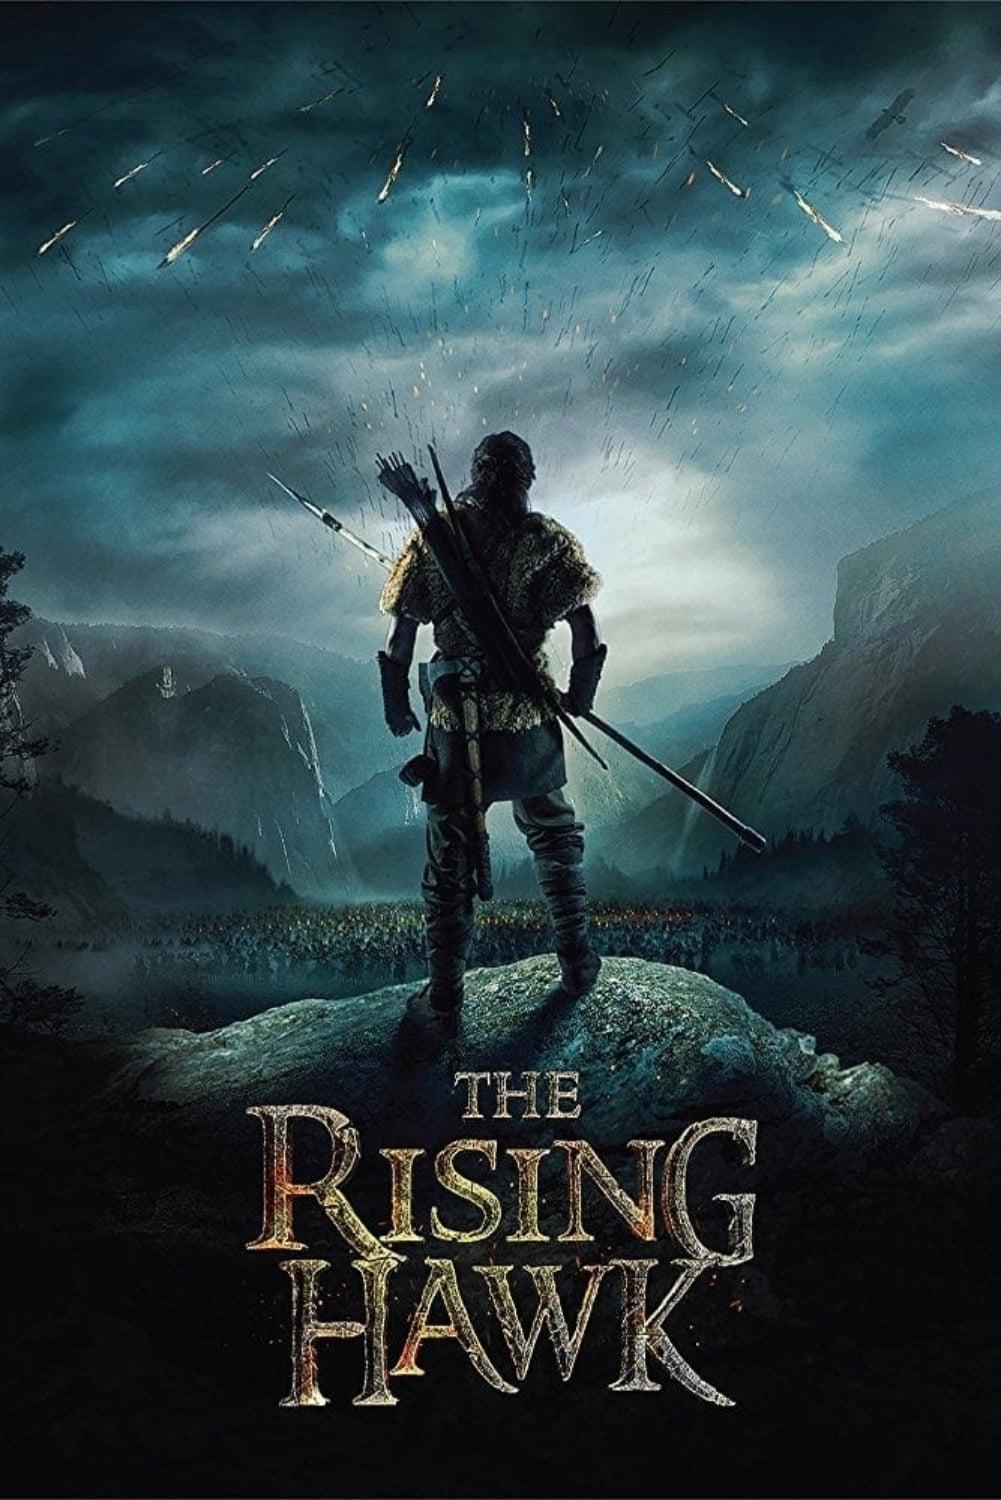 The Rising Hawk poster